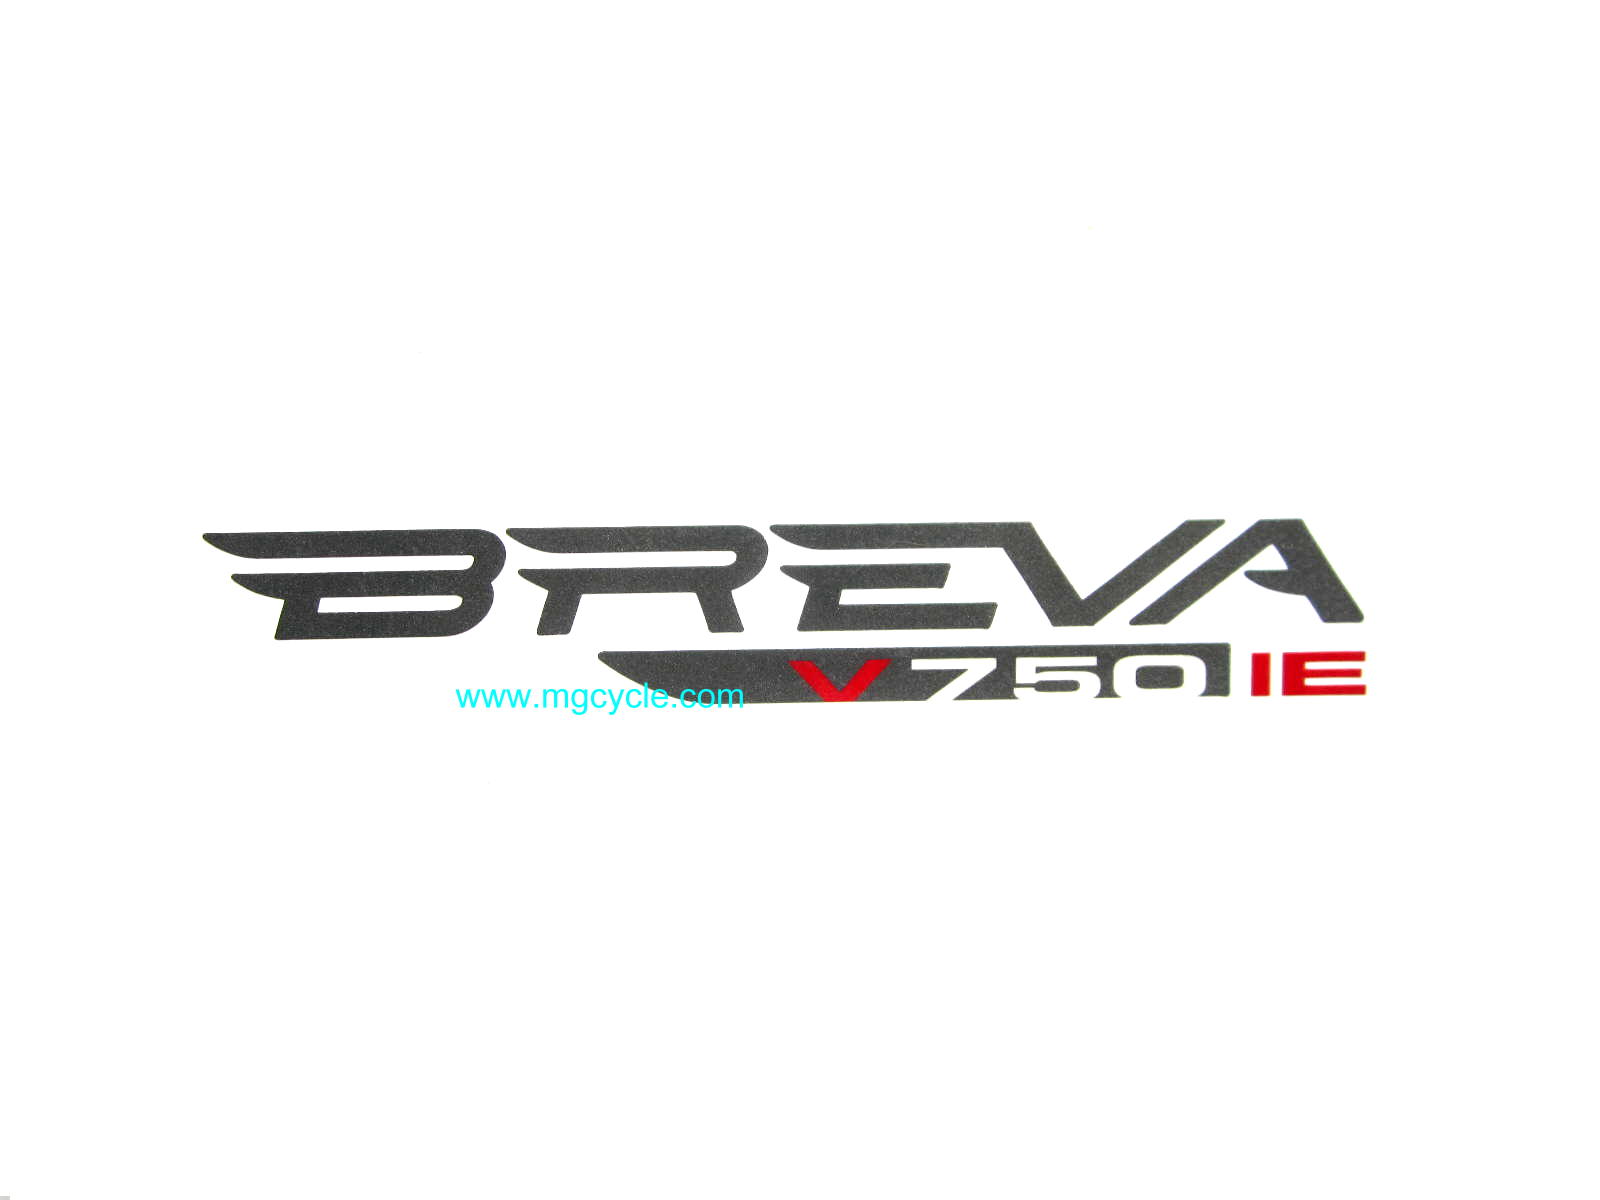 "Breva 750 IE" decal metal-gray GU32926311 - Click Image to Close